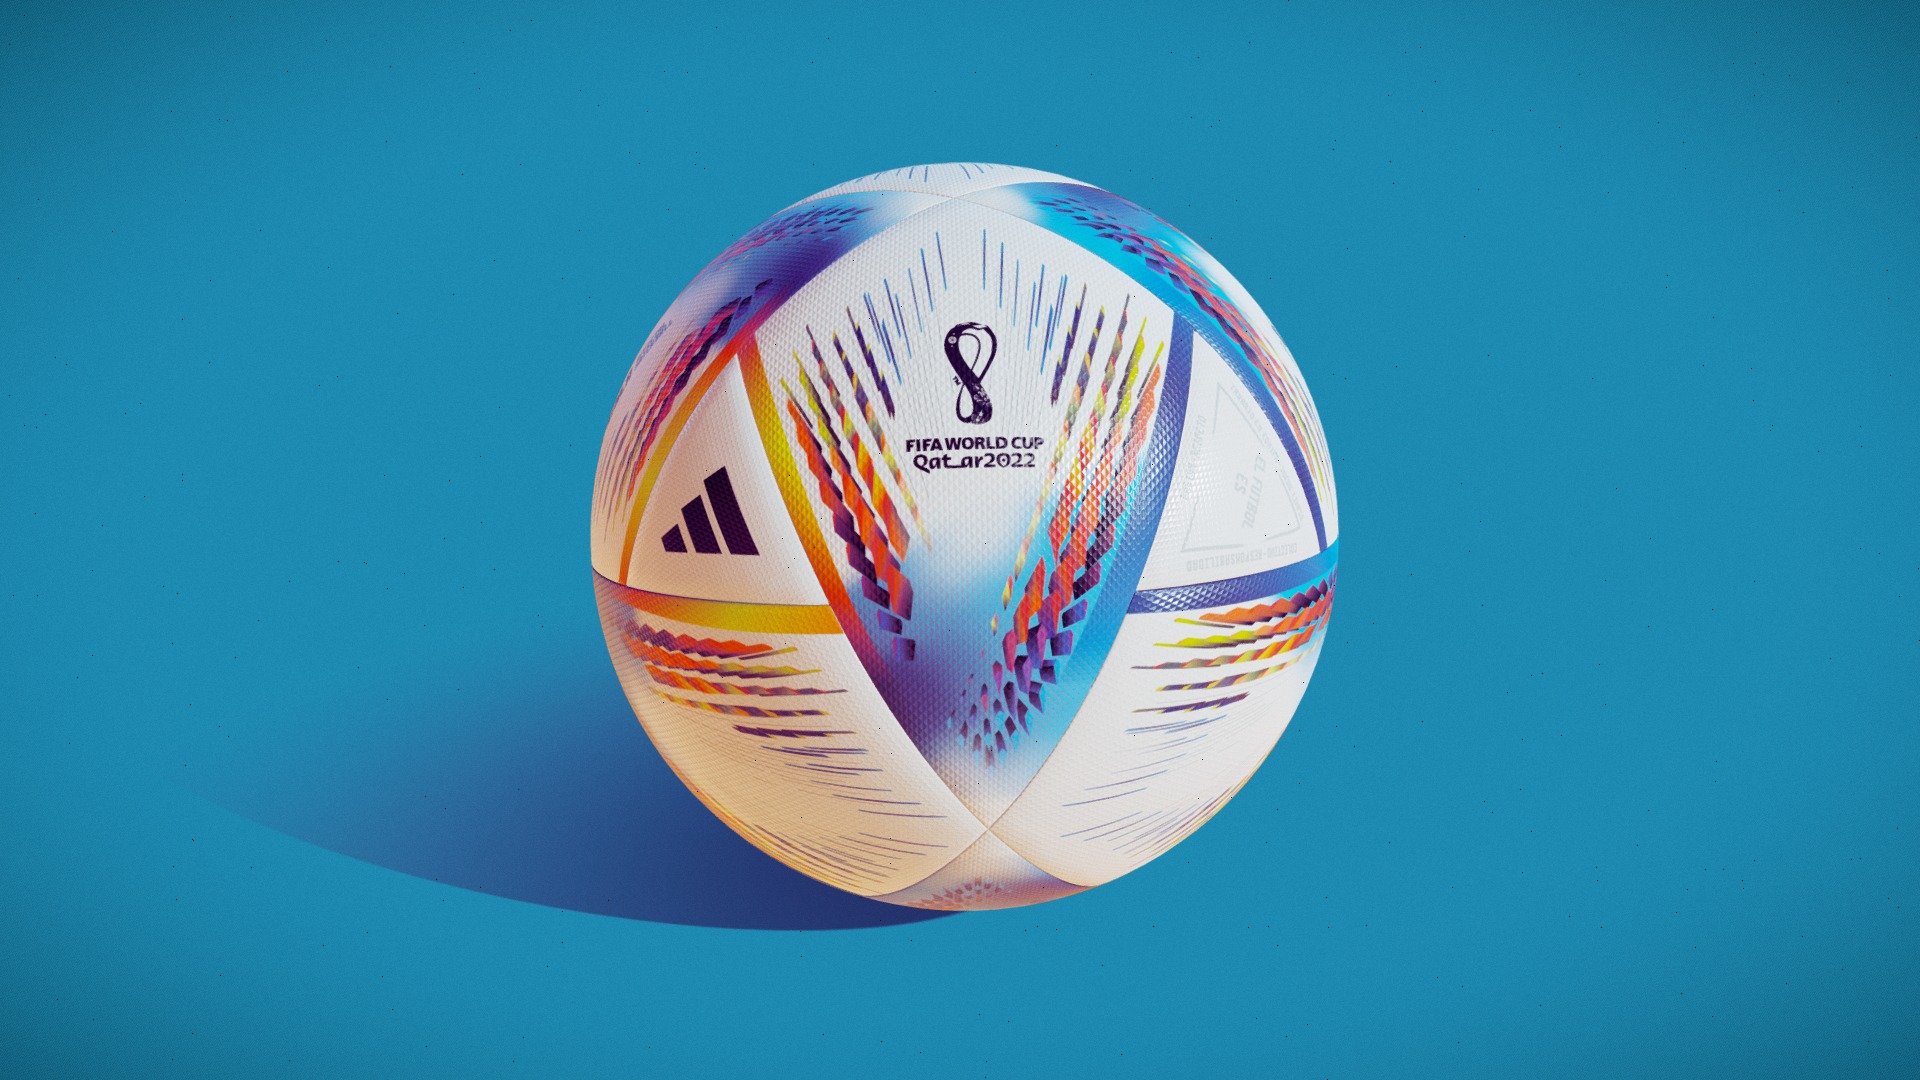 LIVE: Fifa World Cup Qatar 2022 European qualifying draw - Live - BBC Sport